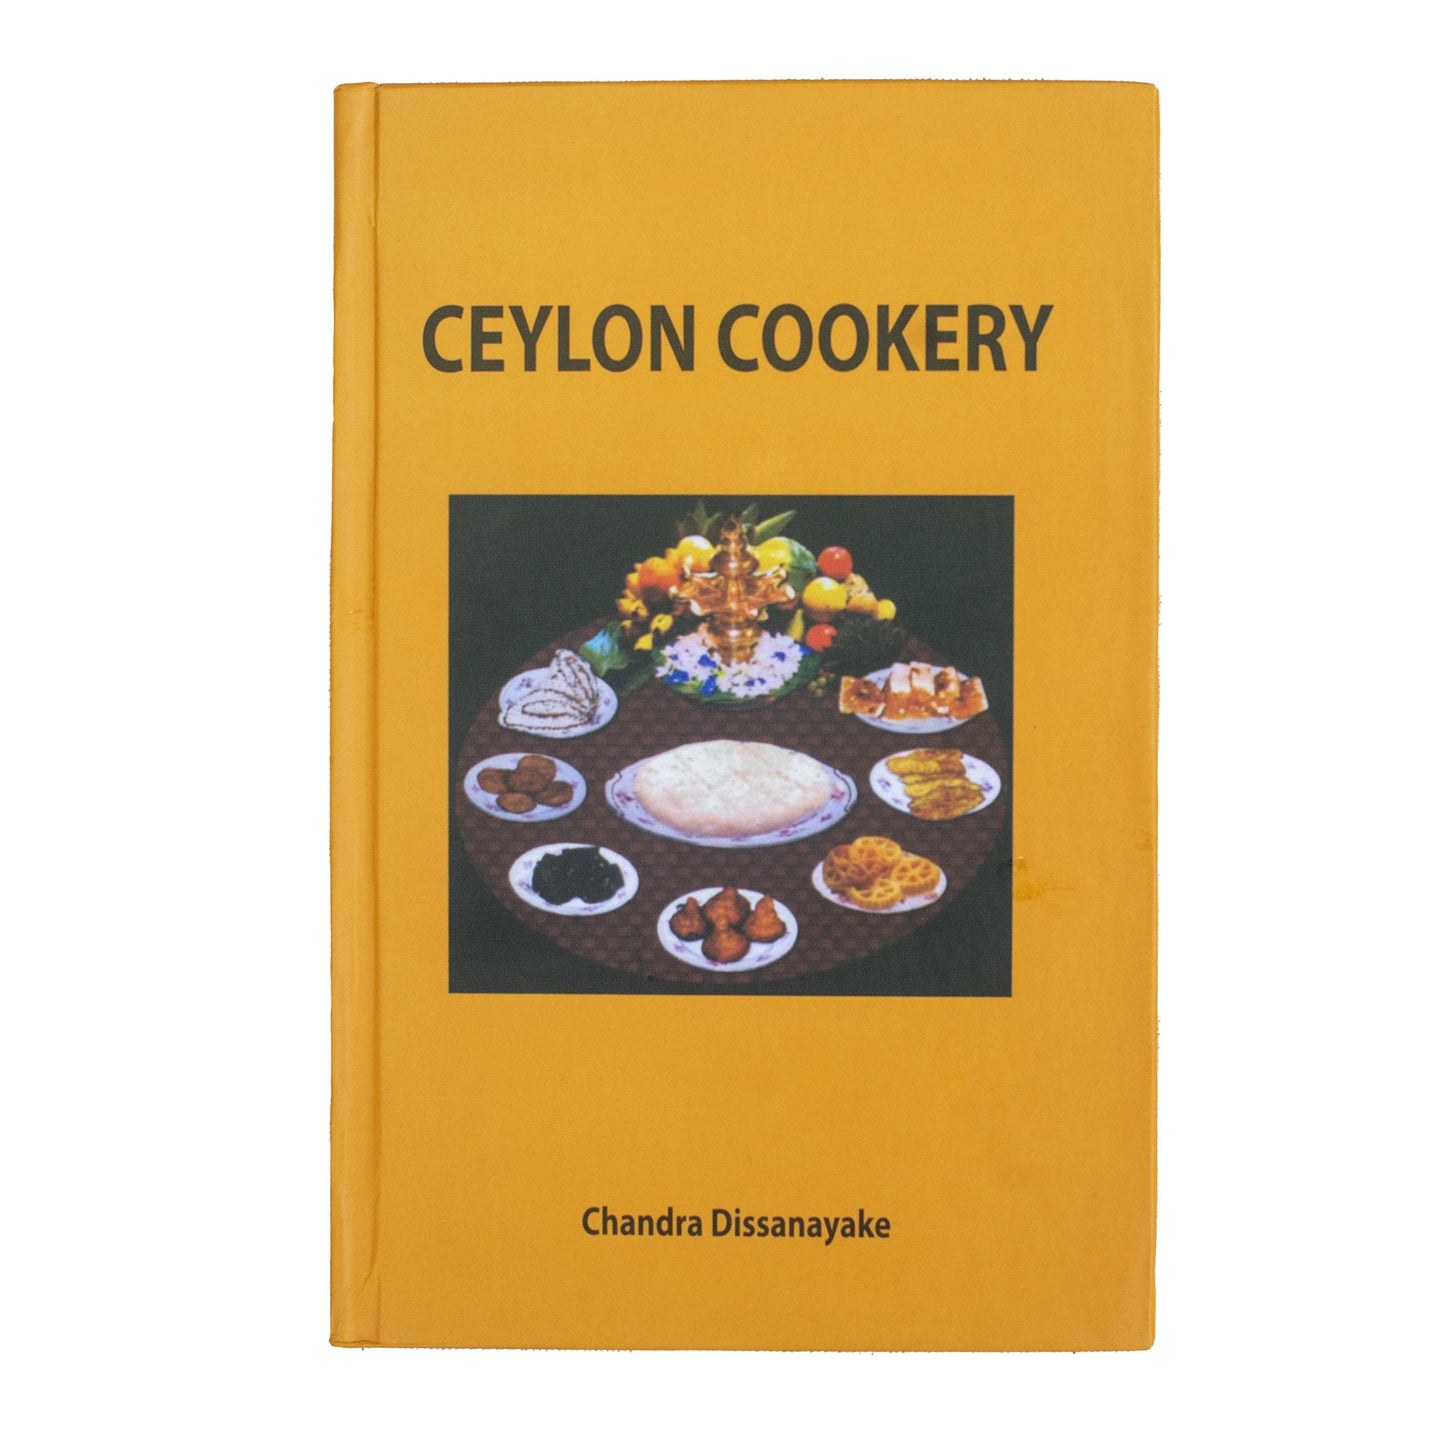 Ceylon Cookery by Chandra Dissanayake